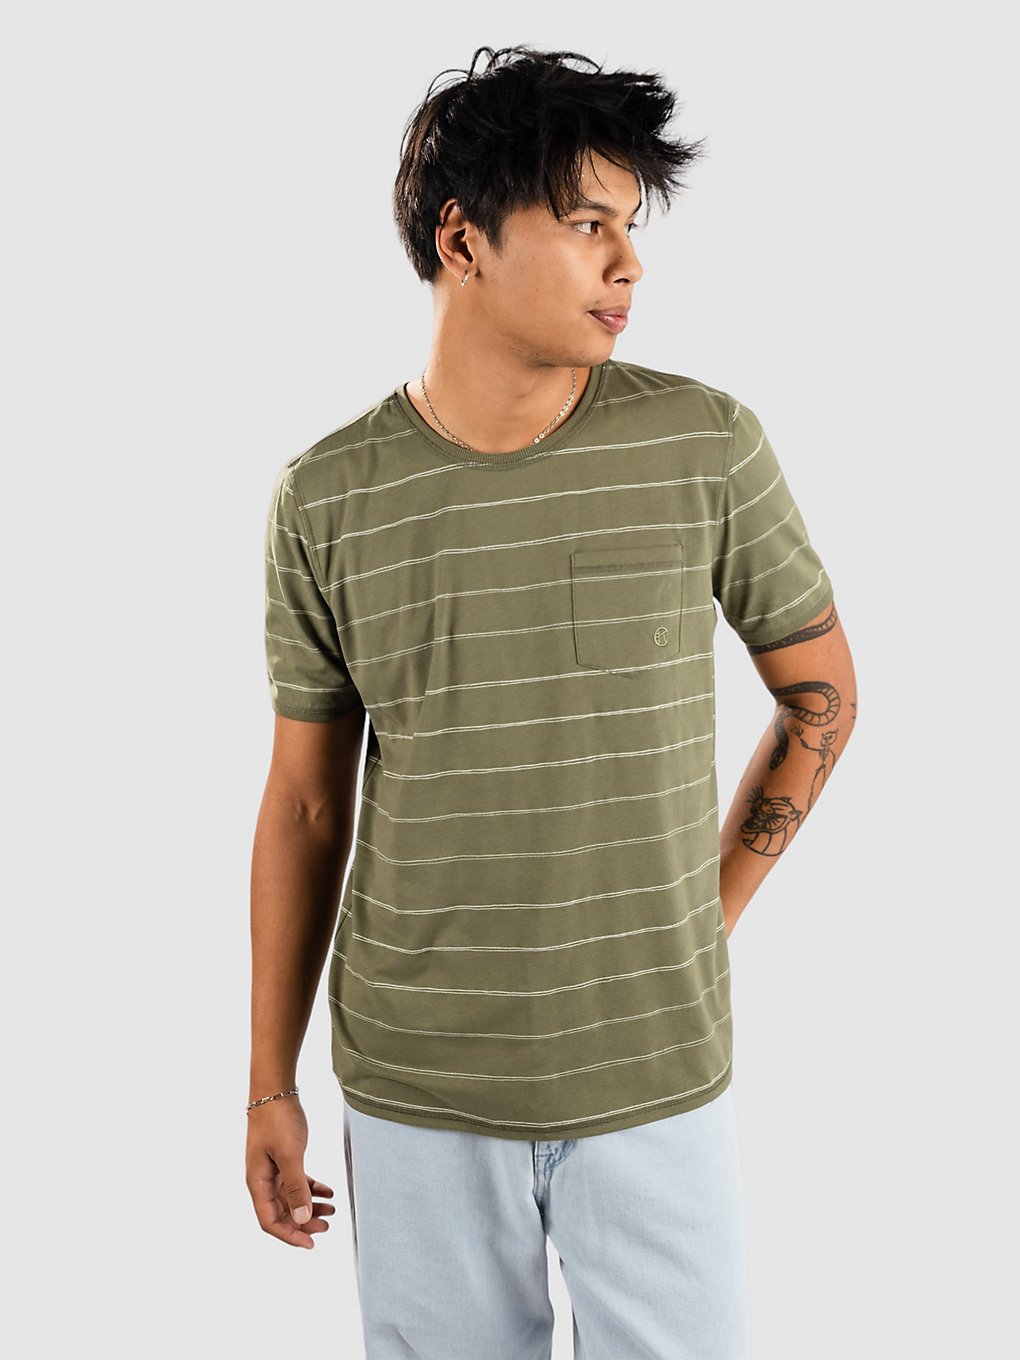 Kazane Moss T-Shirt four leave clover stripe kaufen